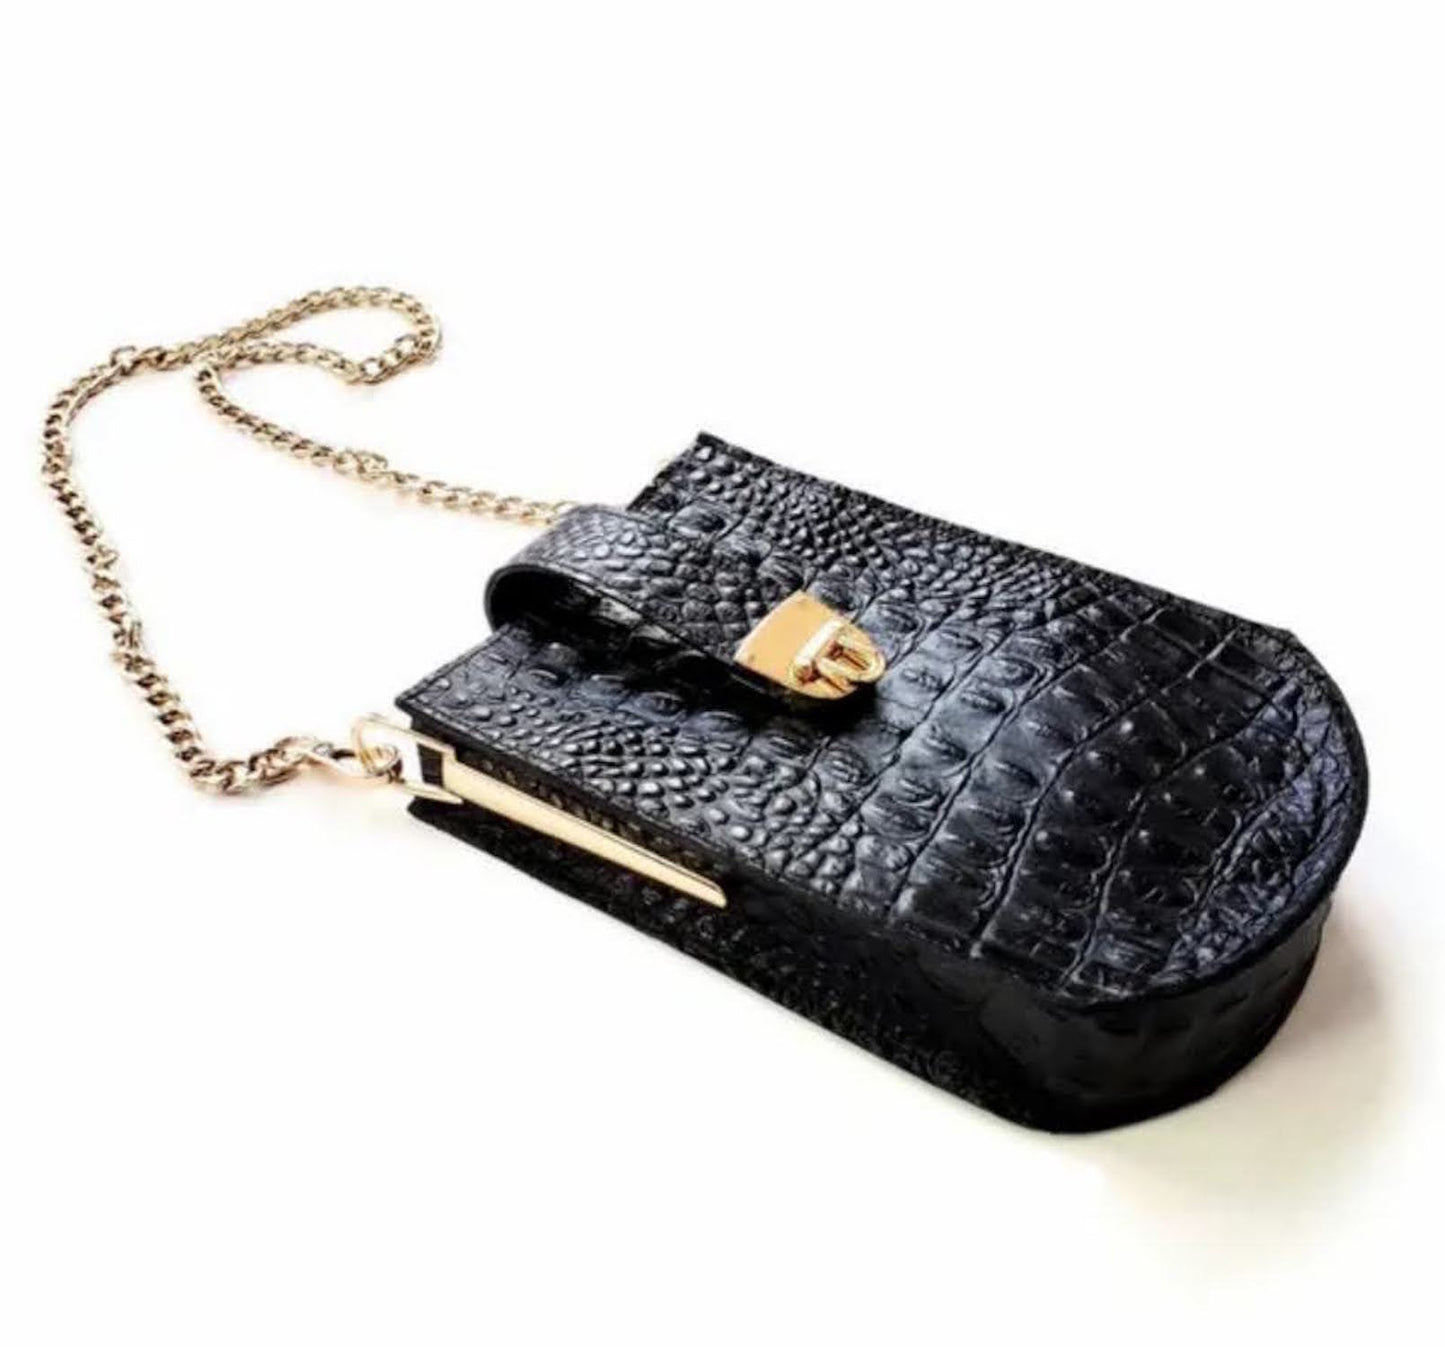 Katana bag in black croc-effect leather